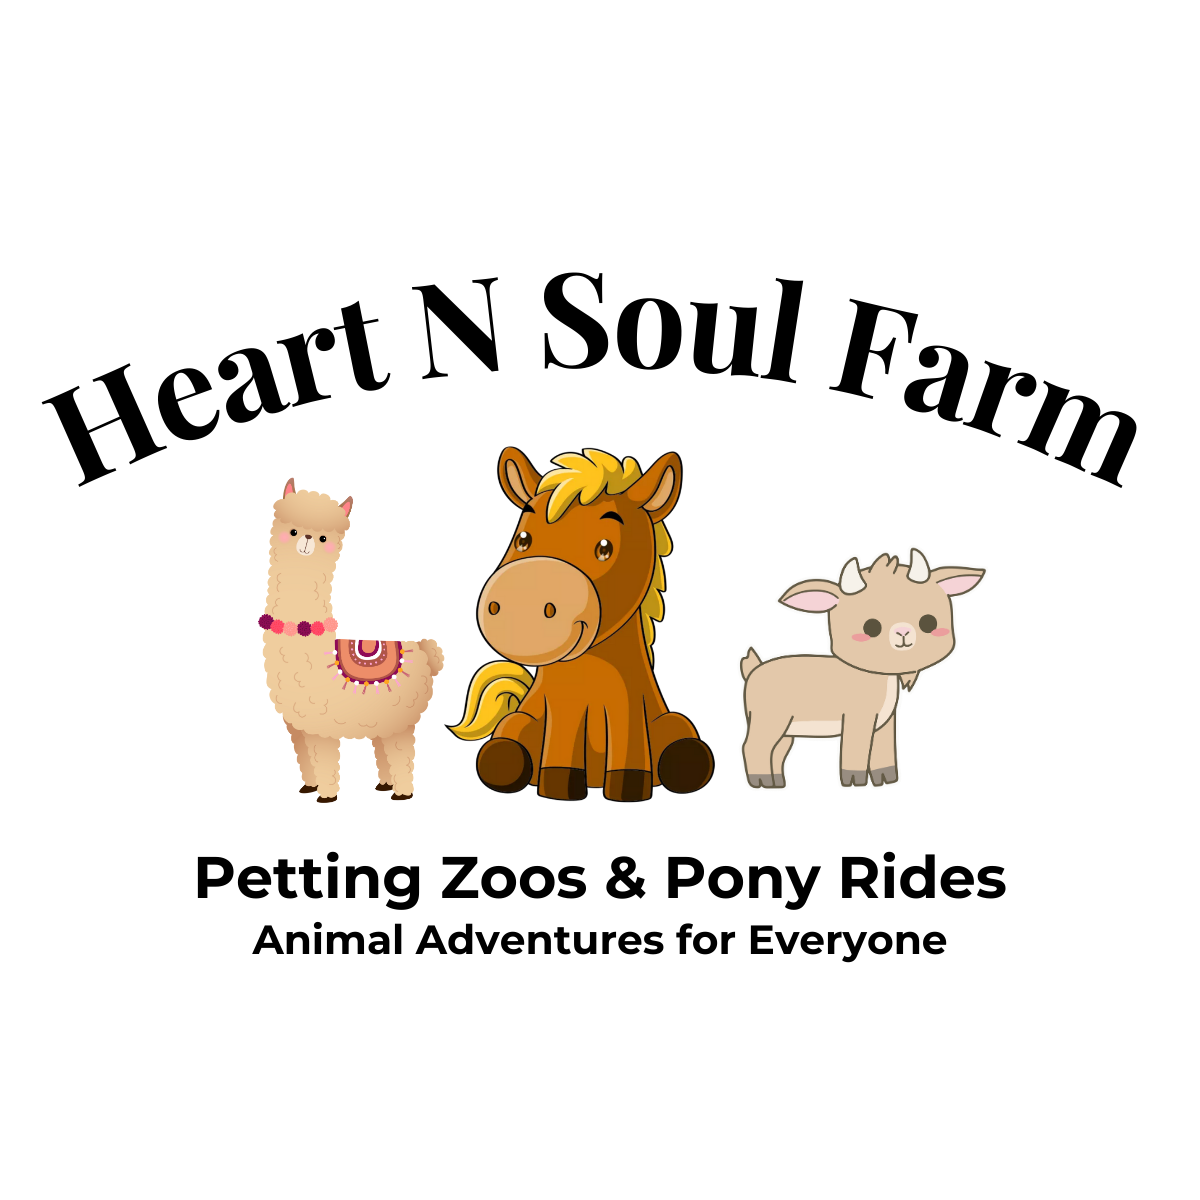 Heart N Soul Farm